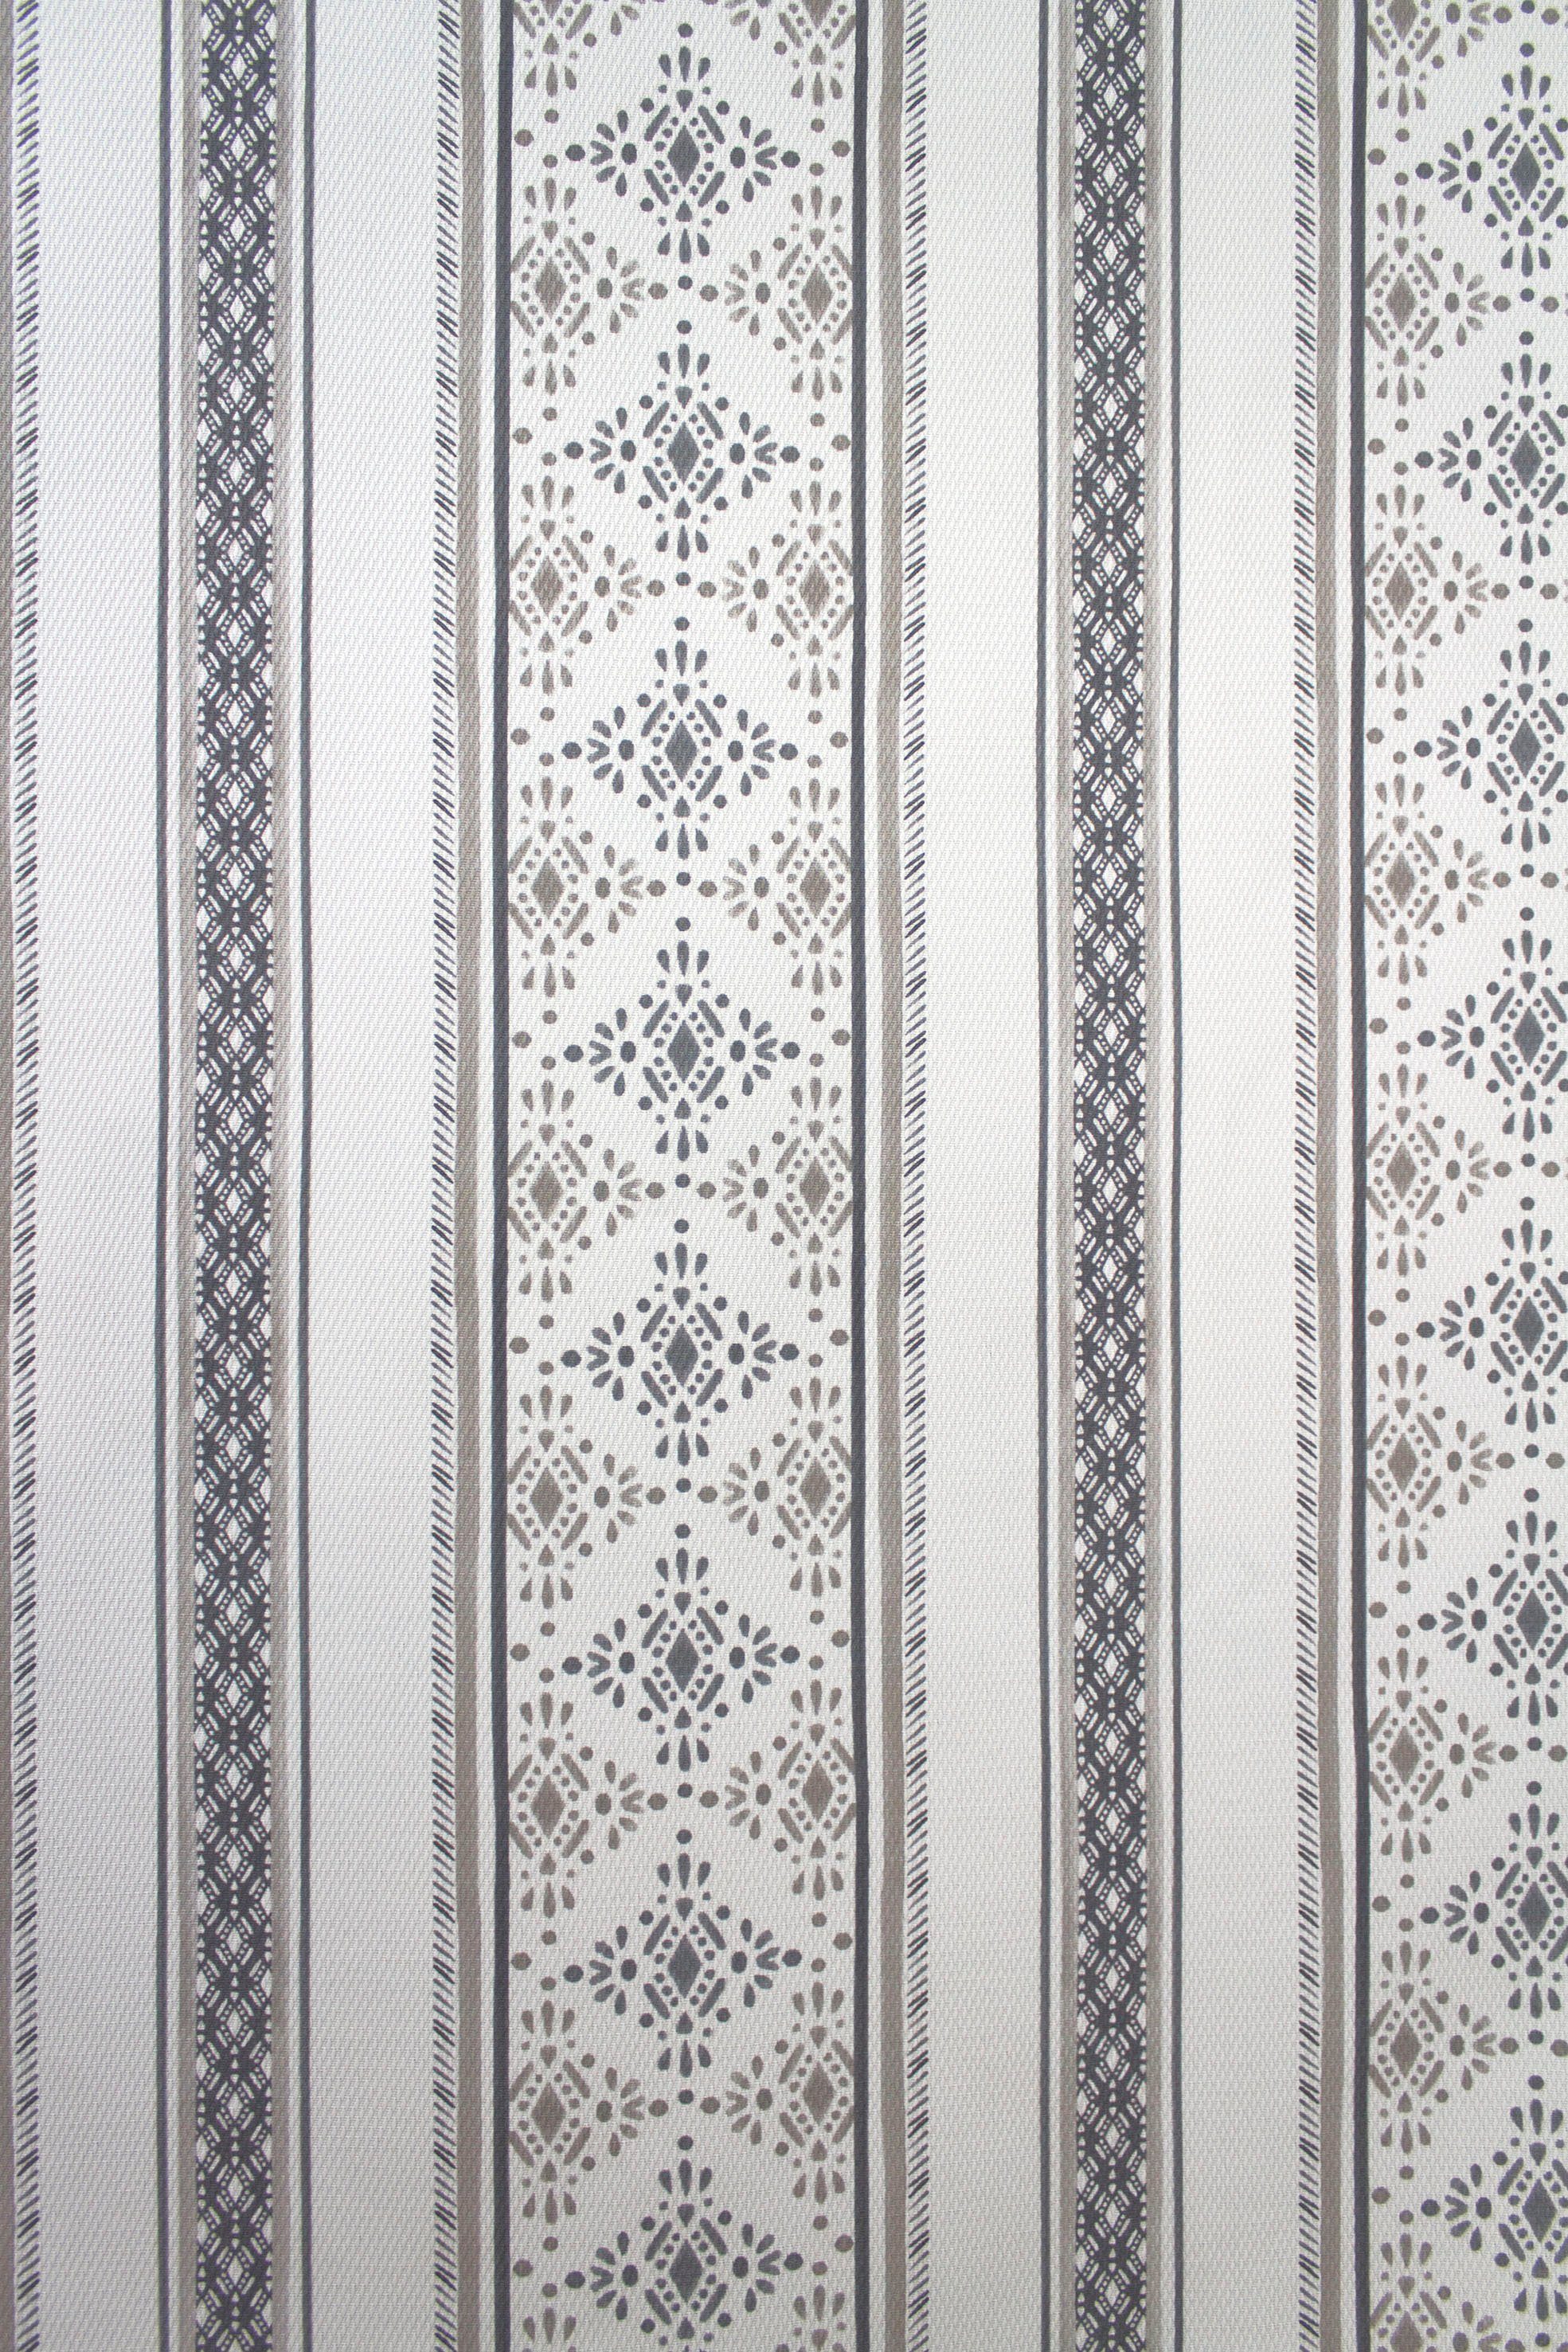 VHG, Vorhang grau Kräuselband (1 Rhona, St), blickdicht